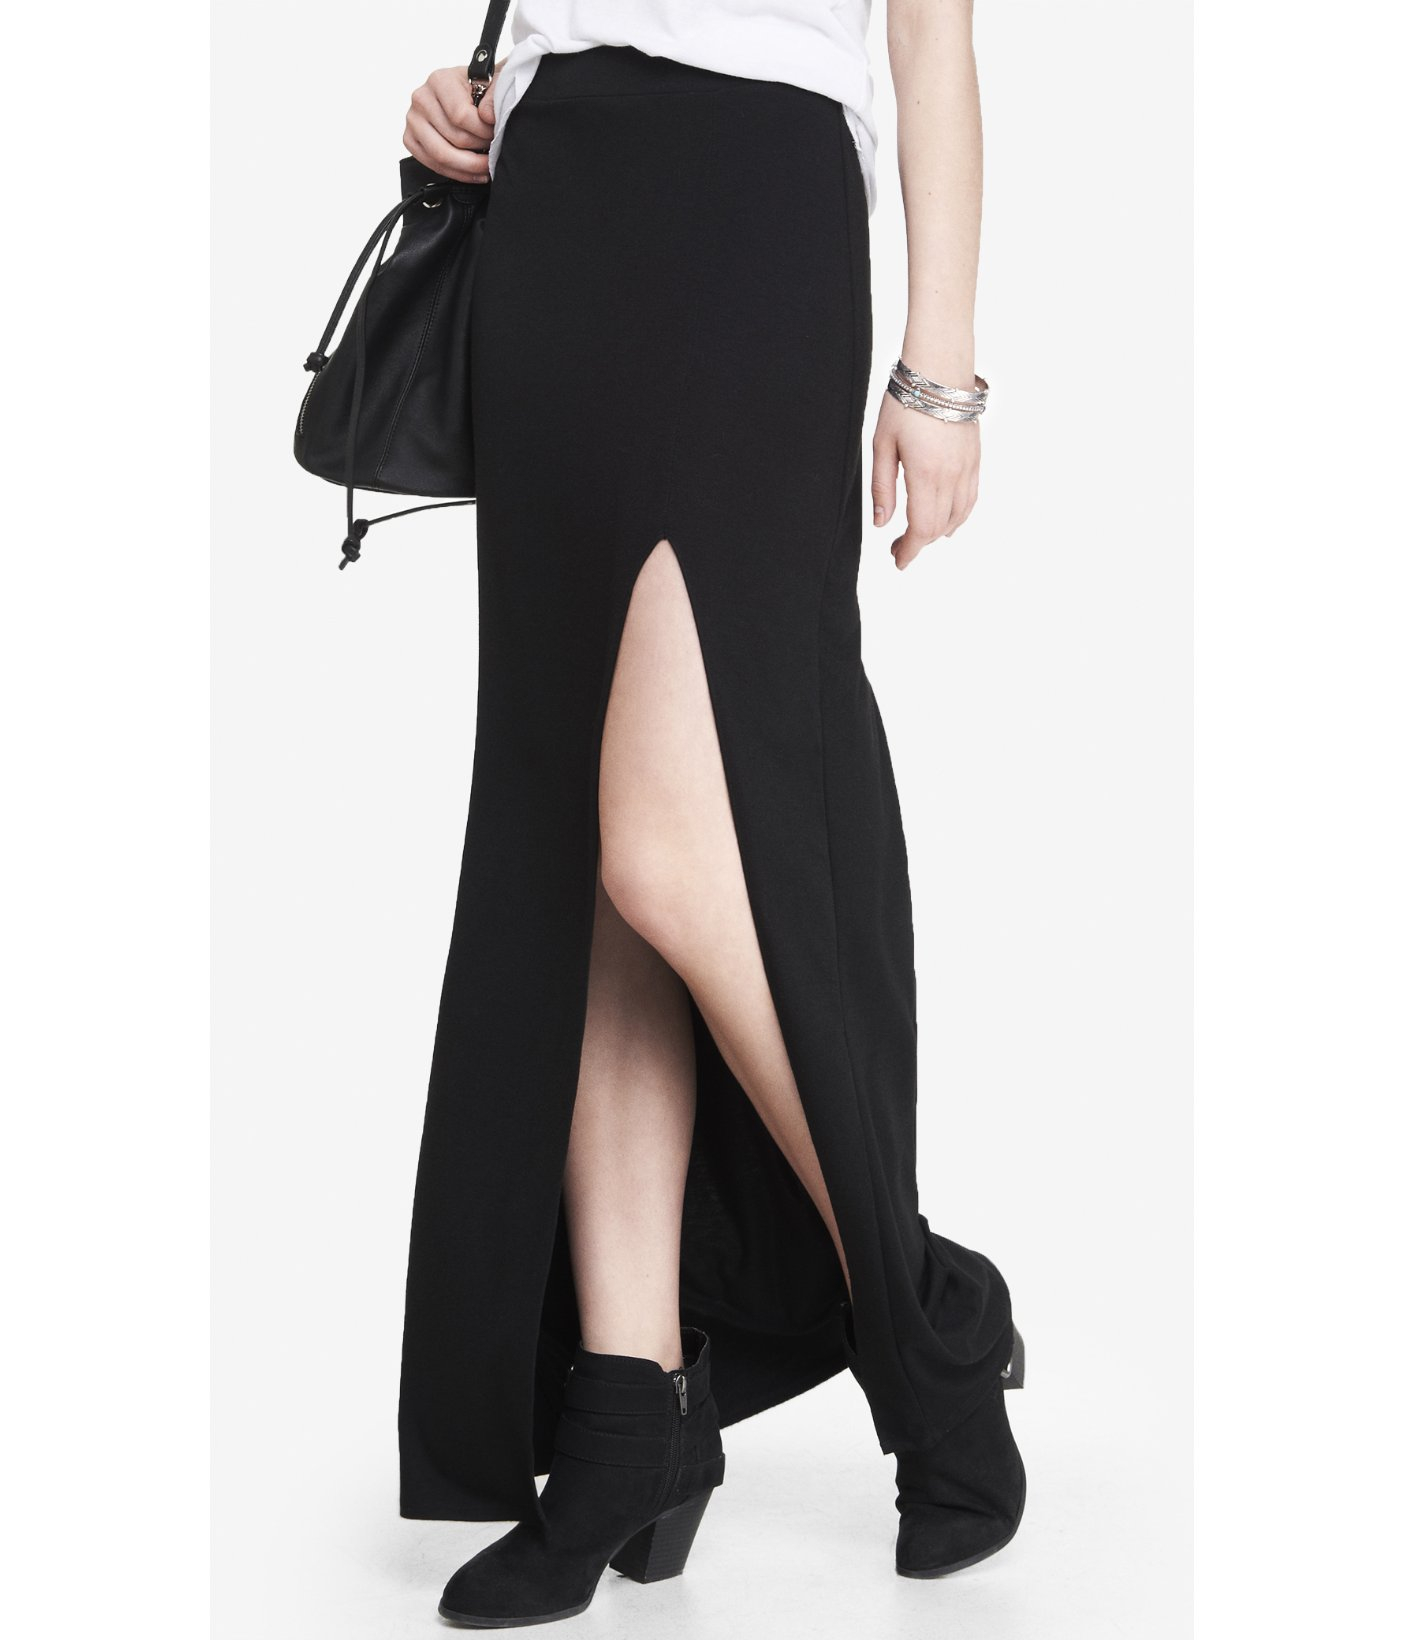 Lyst - Express Knit High Slit Maxi Skirt in Black